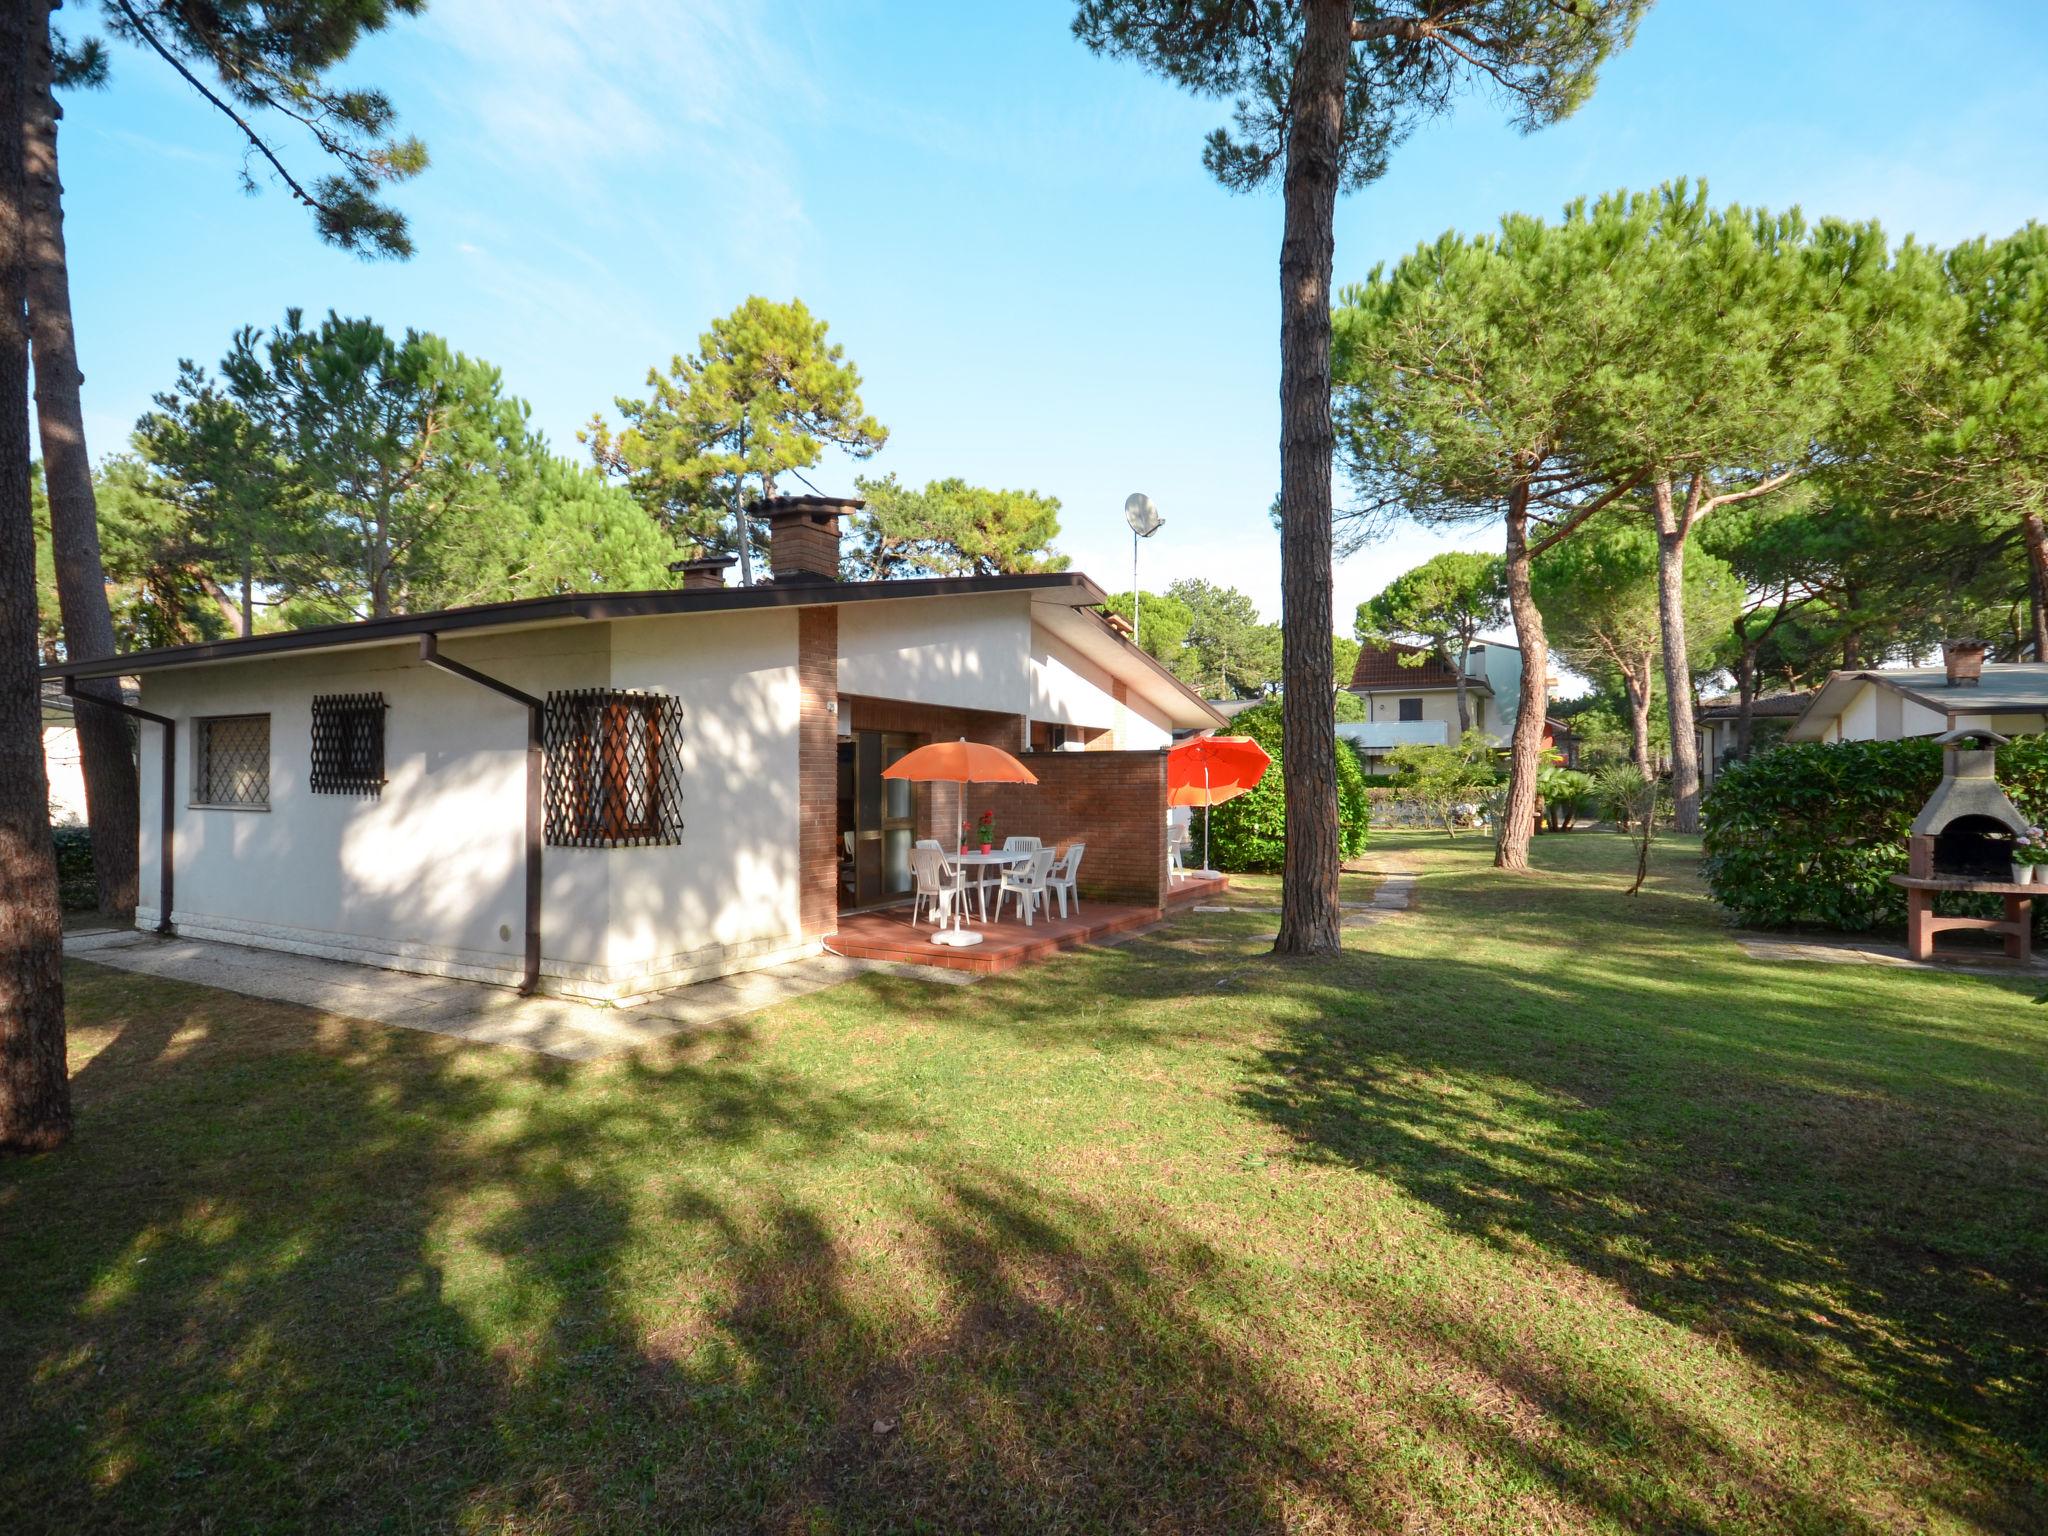 Photo 13 - 2 bedroom House in Lignano Sabbiadoro with garden and sea view